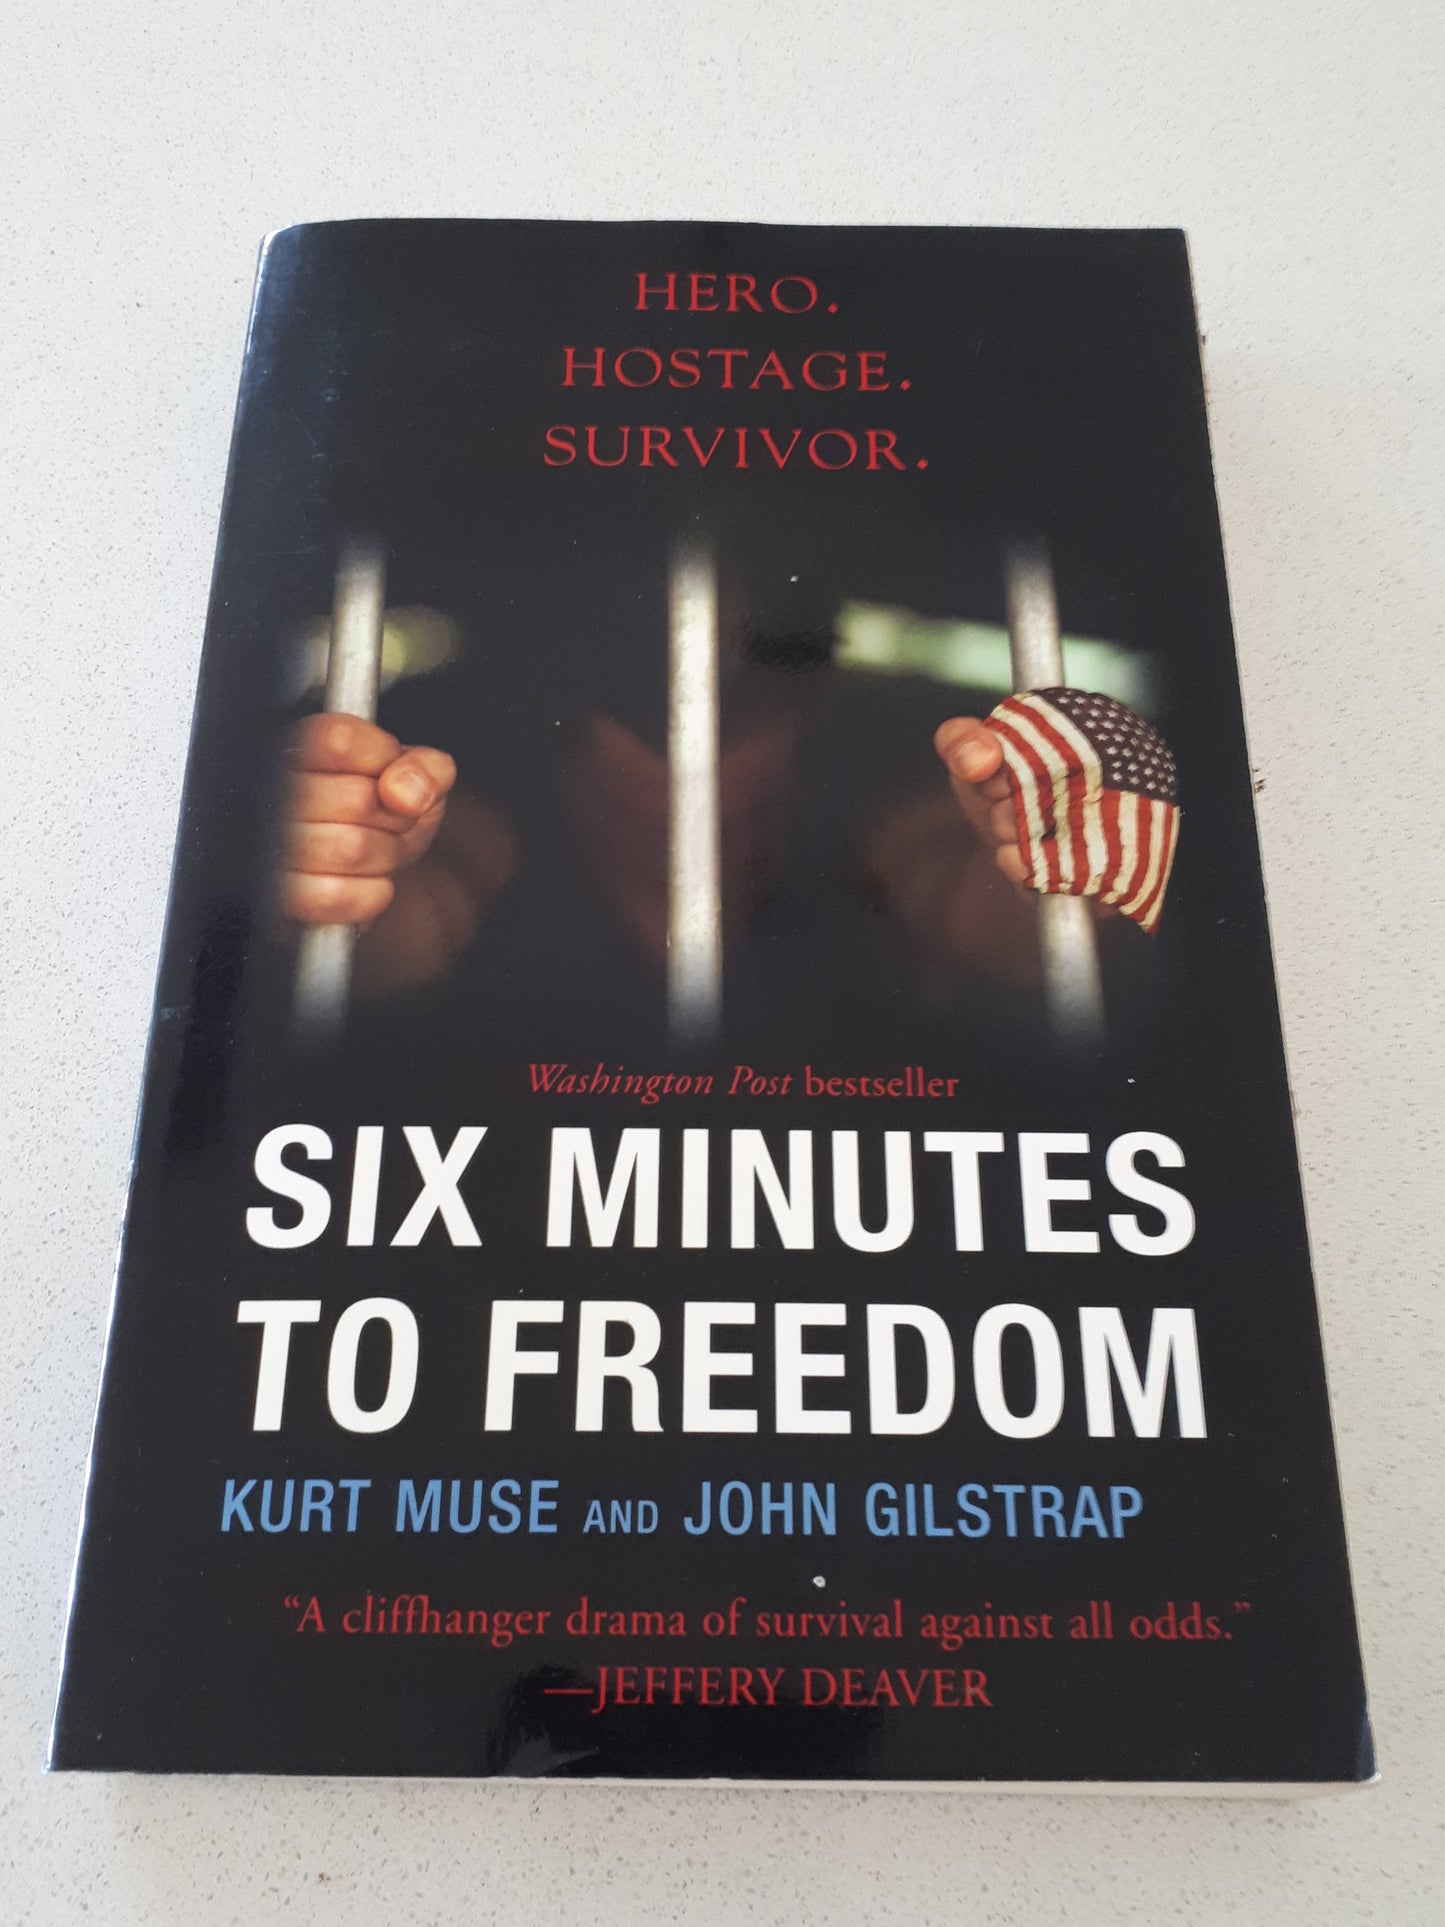 Six Minutes To Freedom by Kurt Muse & John Gilstrap